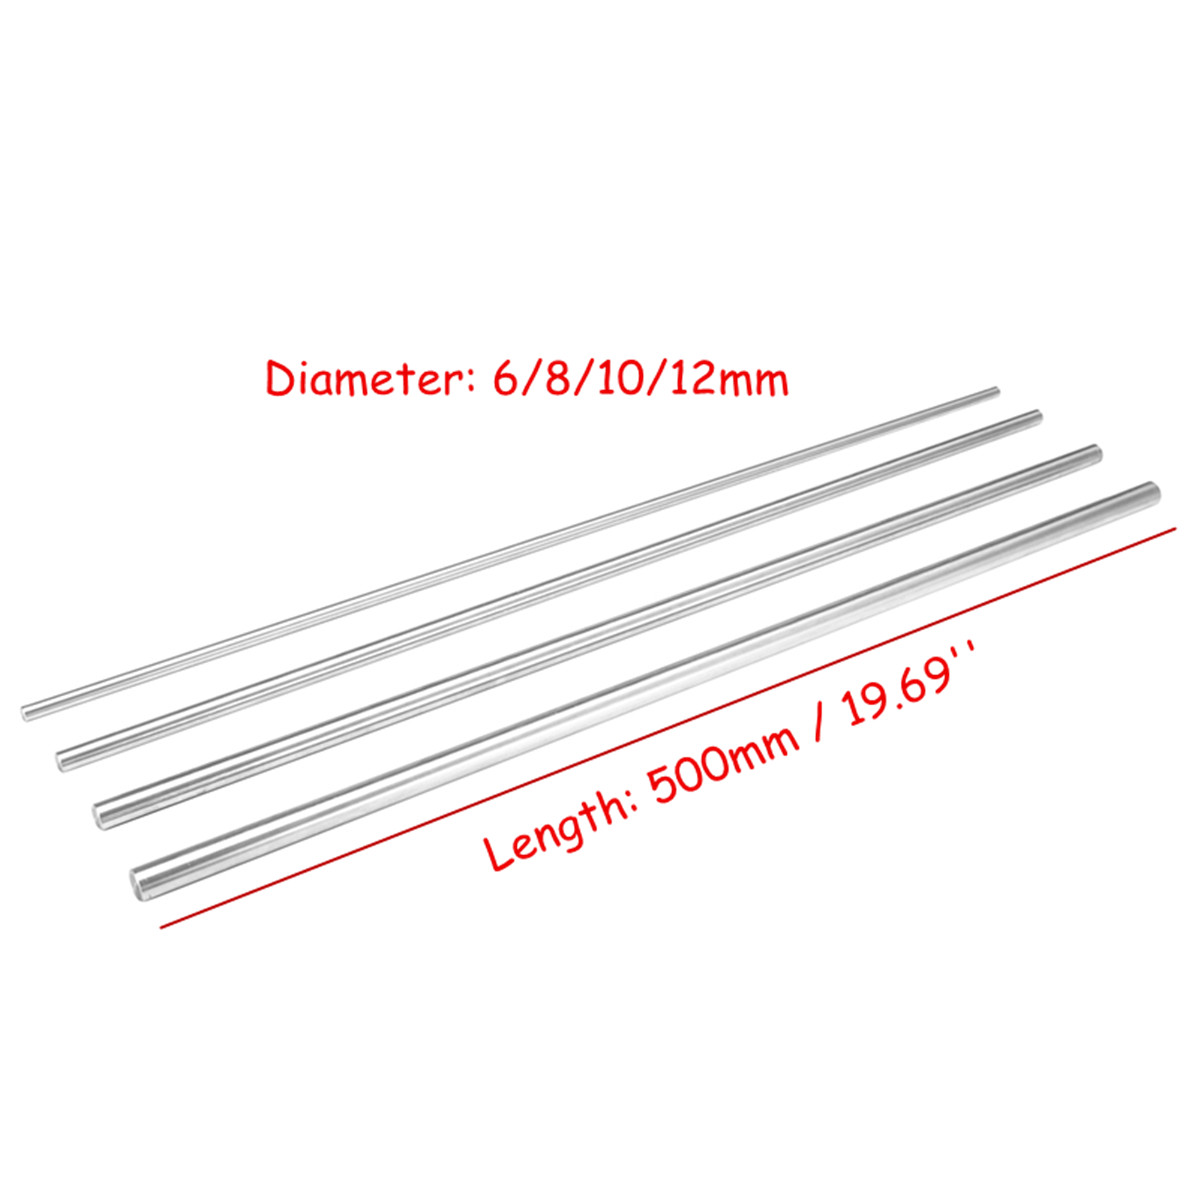 500mm Steel Cylinder Linear Rail Linear Shaft Optical Axis 6/8/10/12mm Diameter Rod 11